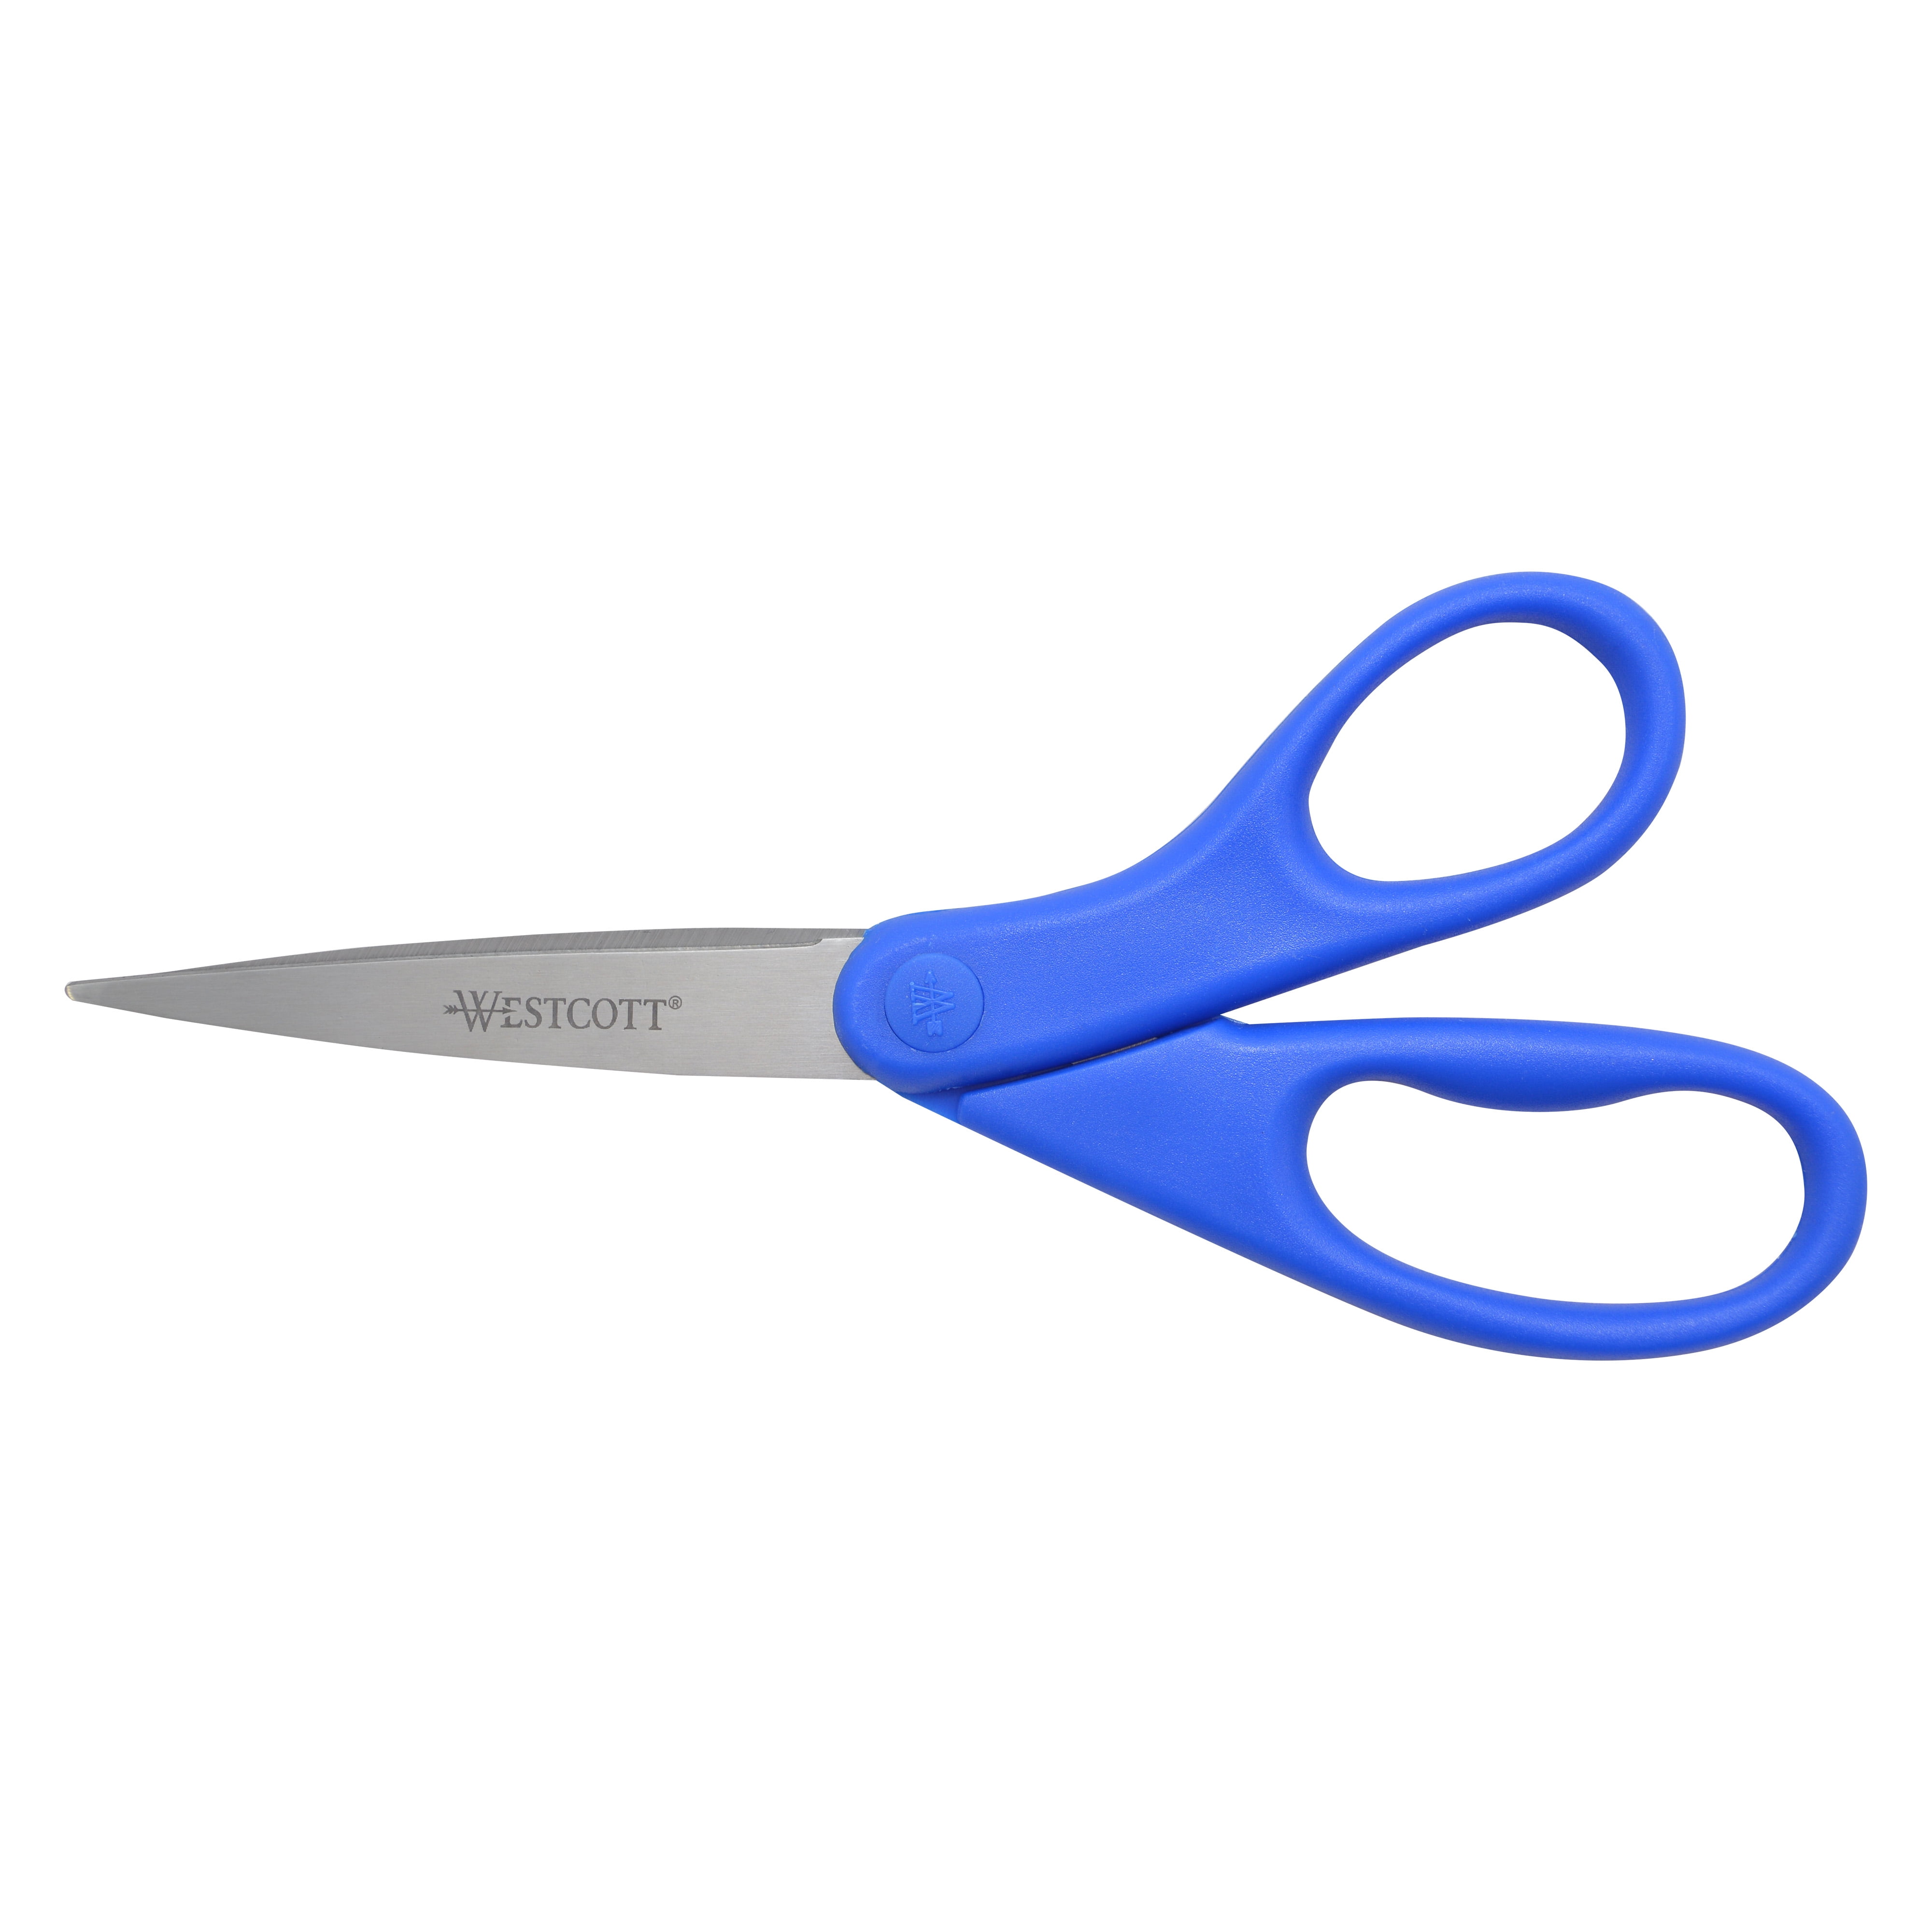 Decorative scissors, 15 pair - arts & crafts - by owner - sale